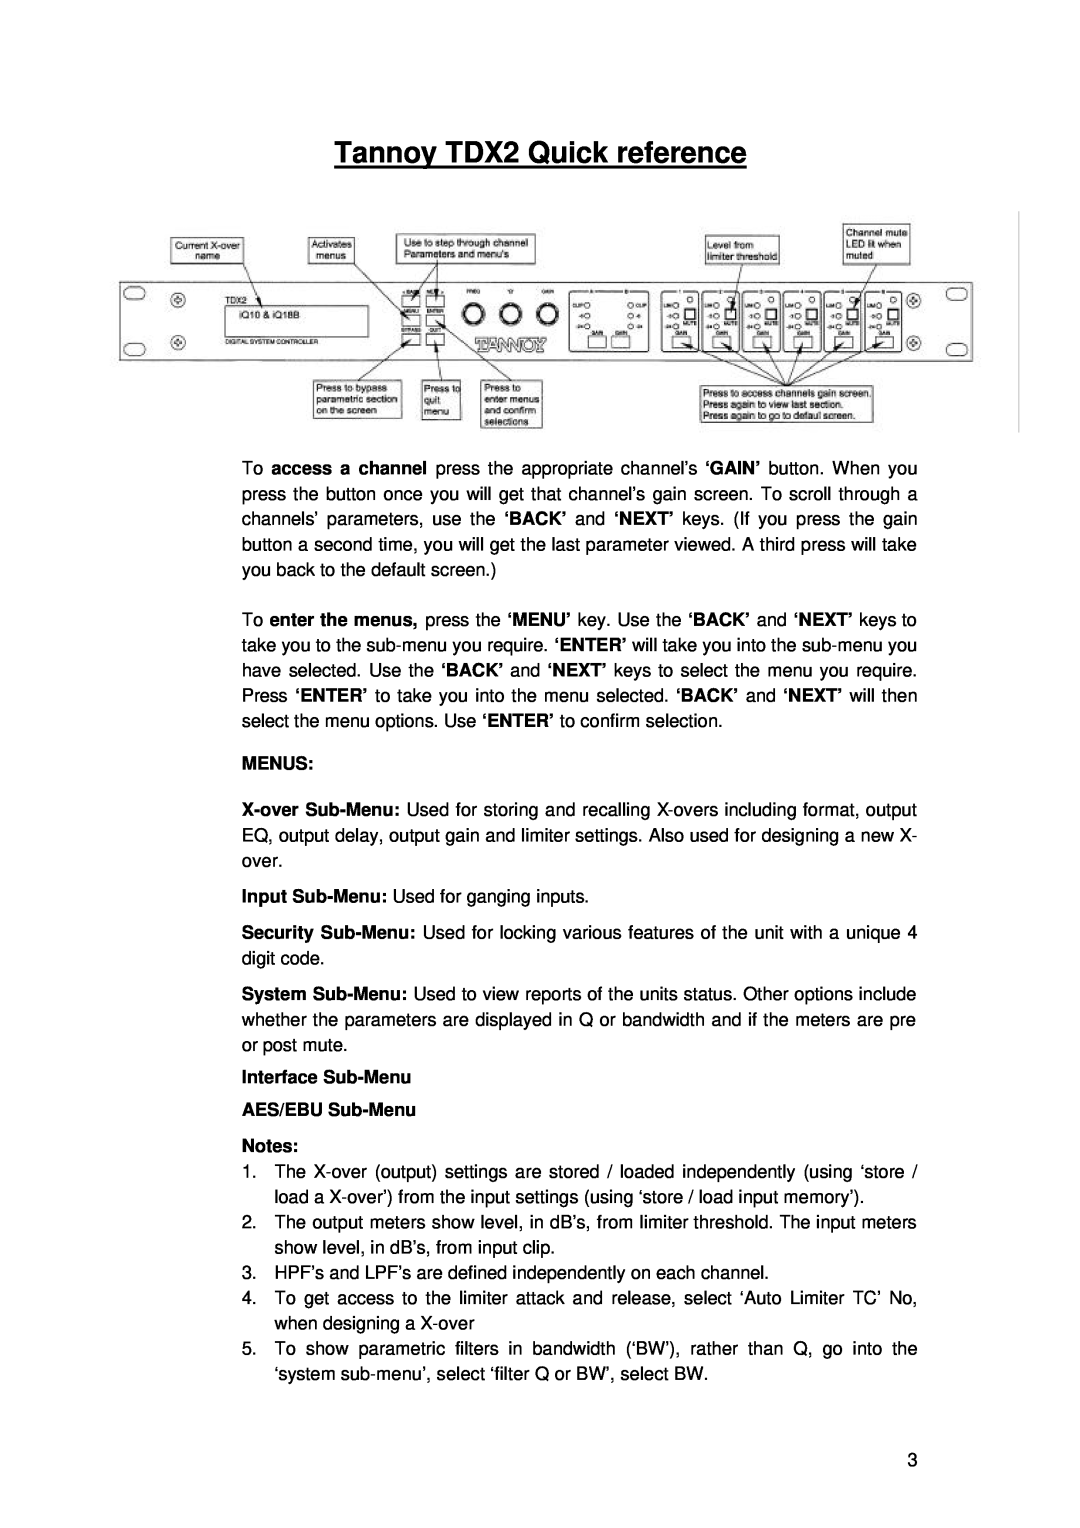 TOA Electronics user manual Tannoy TDX2 Quick reference, Menus, Interface Sub-Menu AES/EBU Sub-Menu 